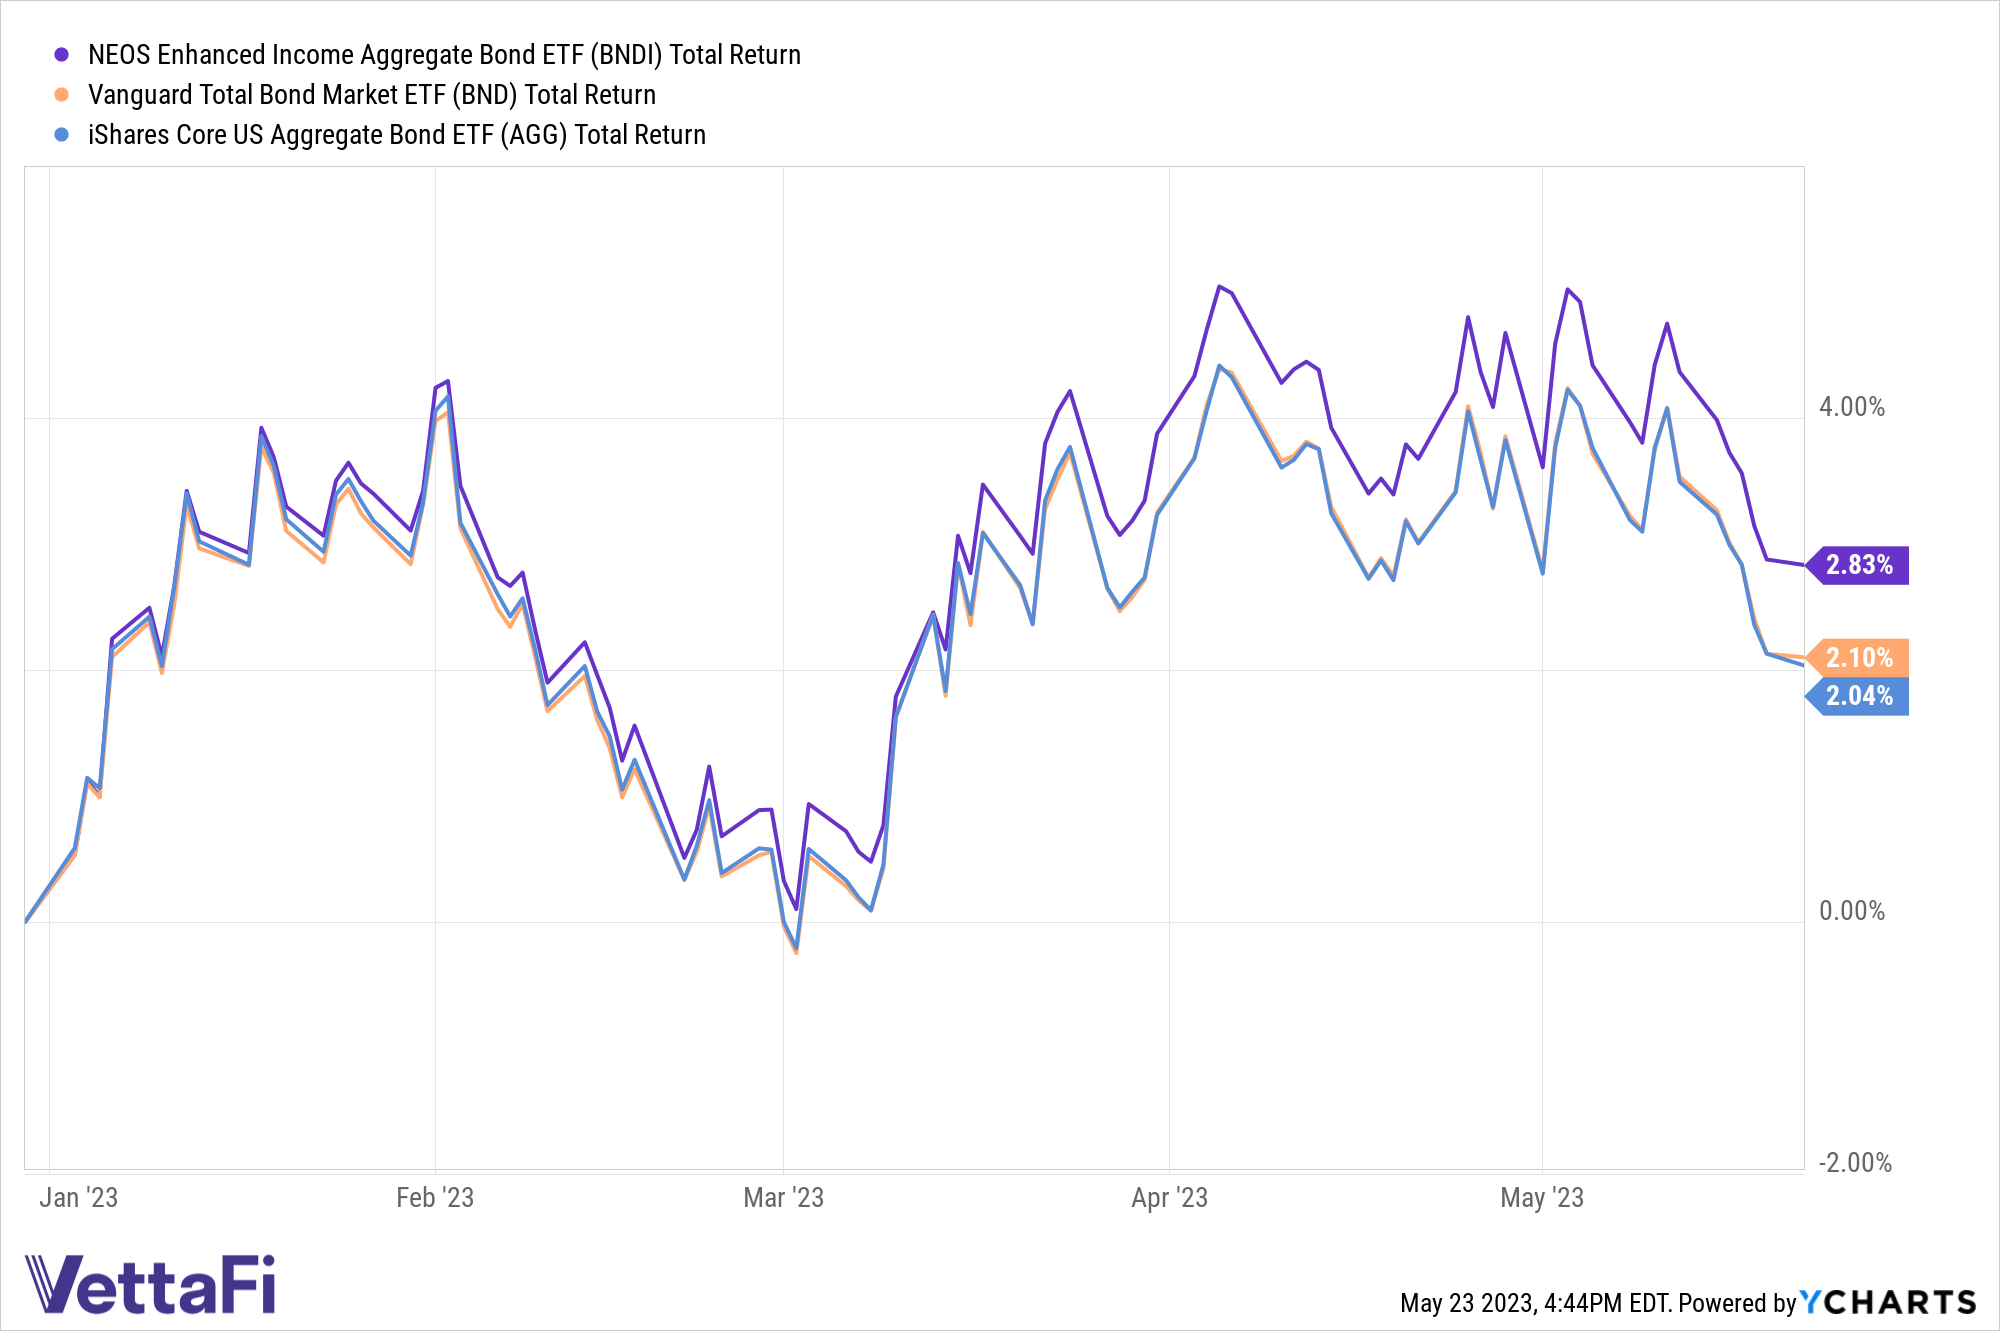 Graph of YTD total returns for BNDI 2.83%, BND 2.10%, AGG 2.04%. 